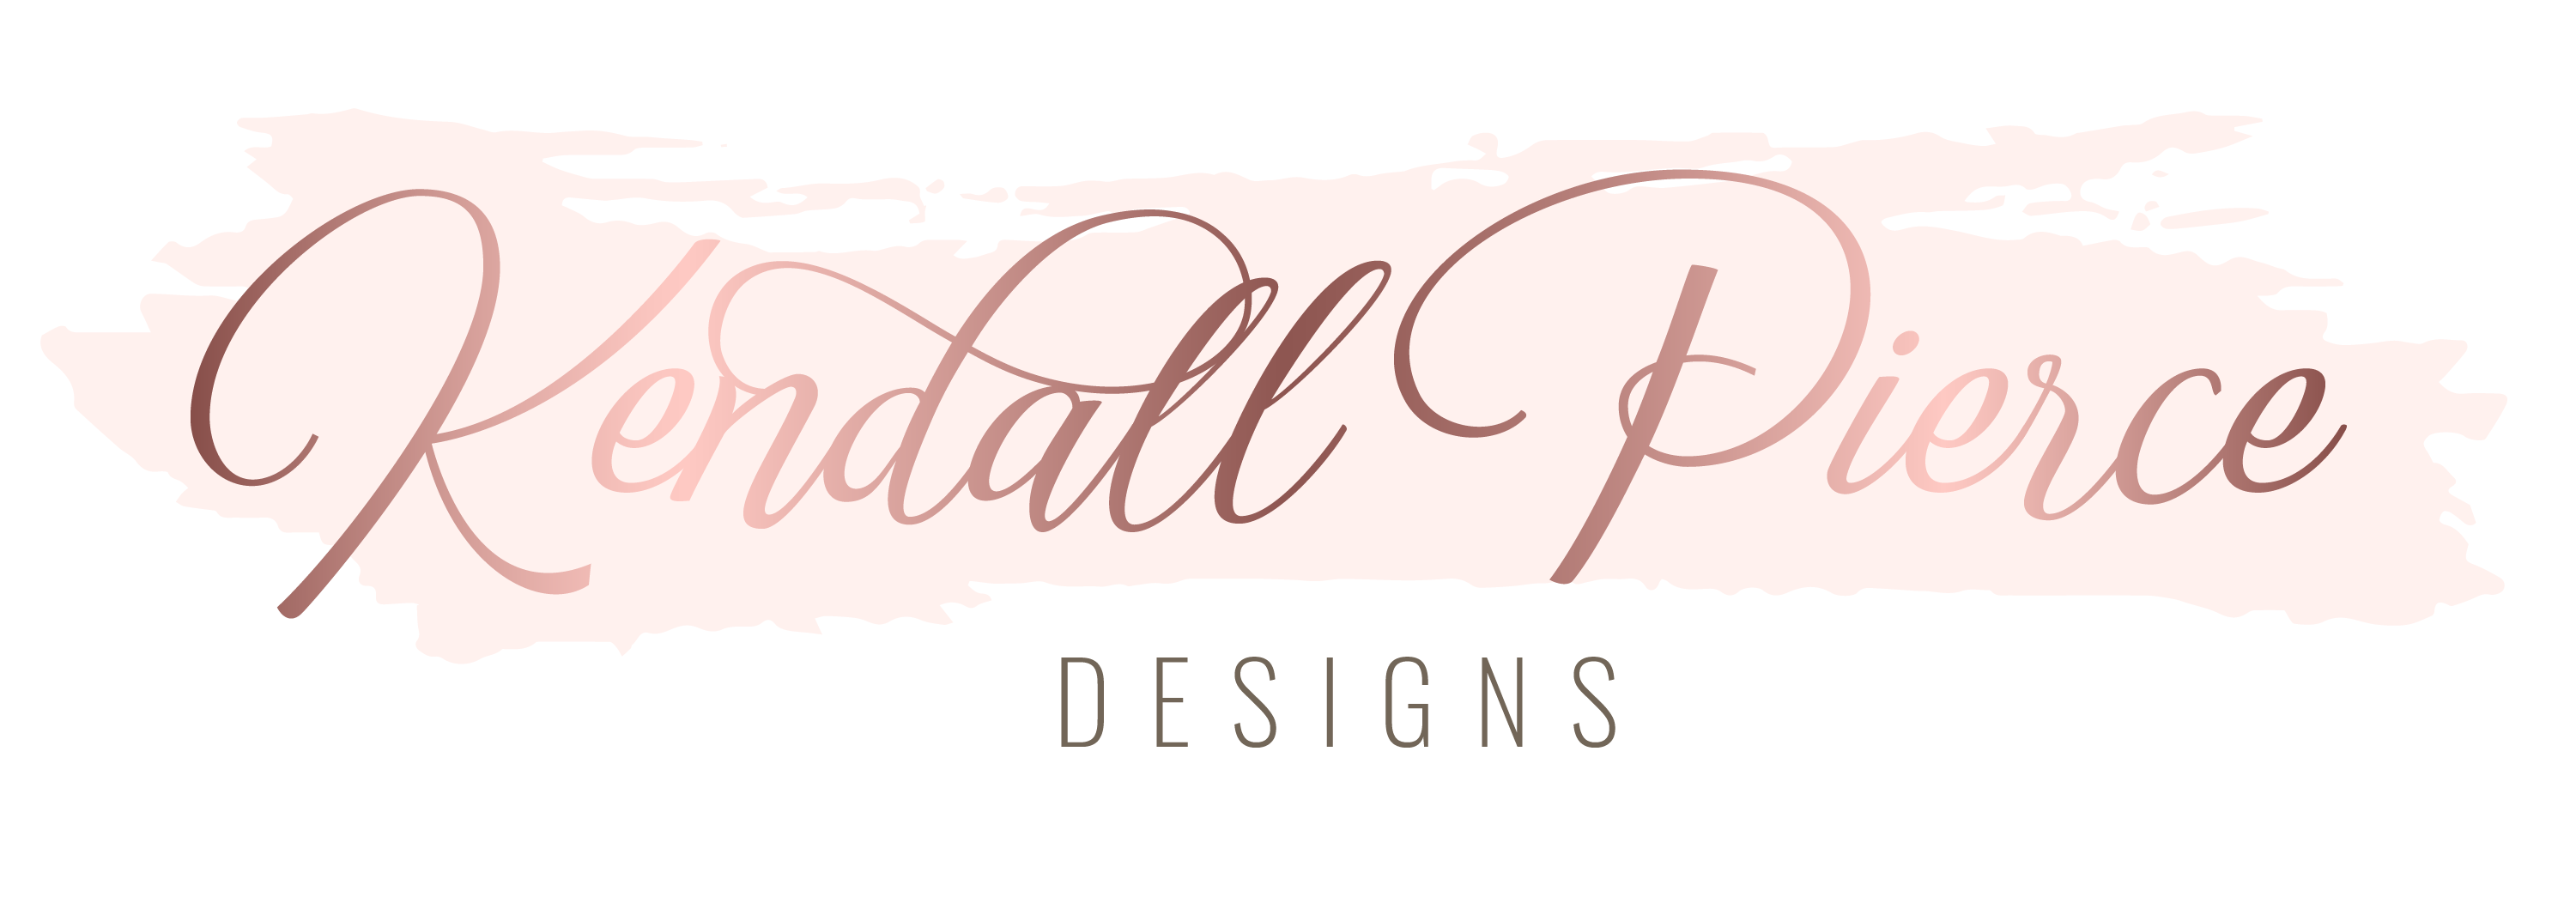 Kendall Pierce Designs